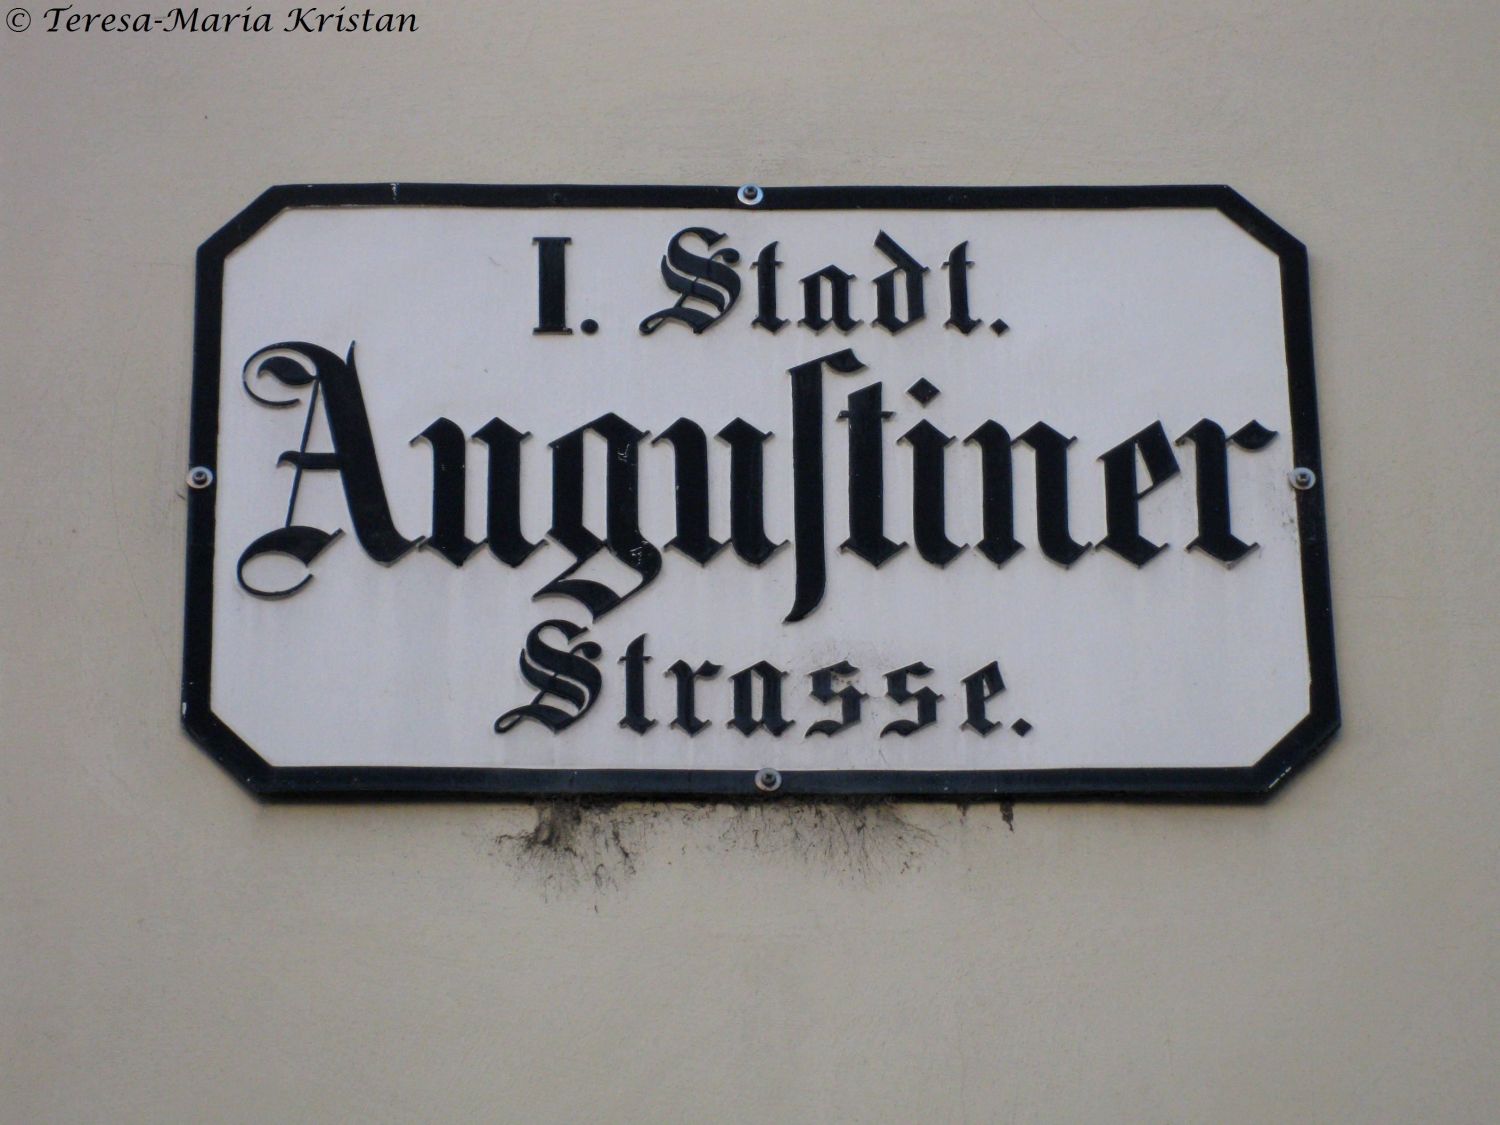 Augustiner Straße, Wien